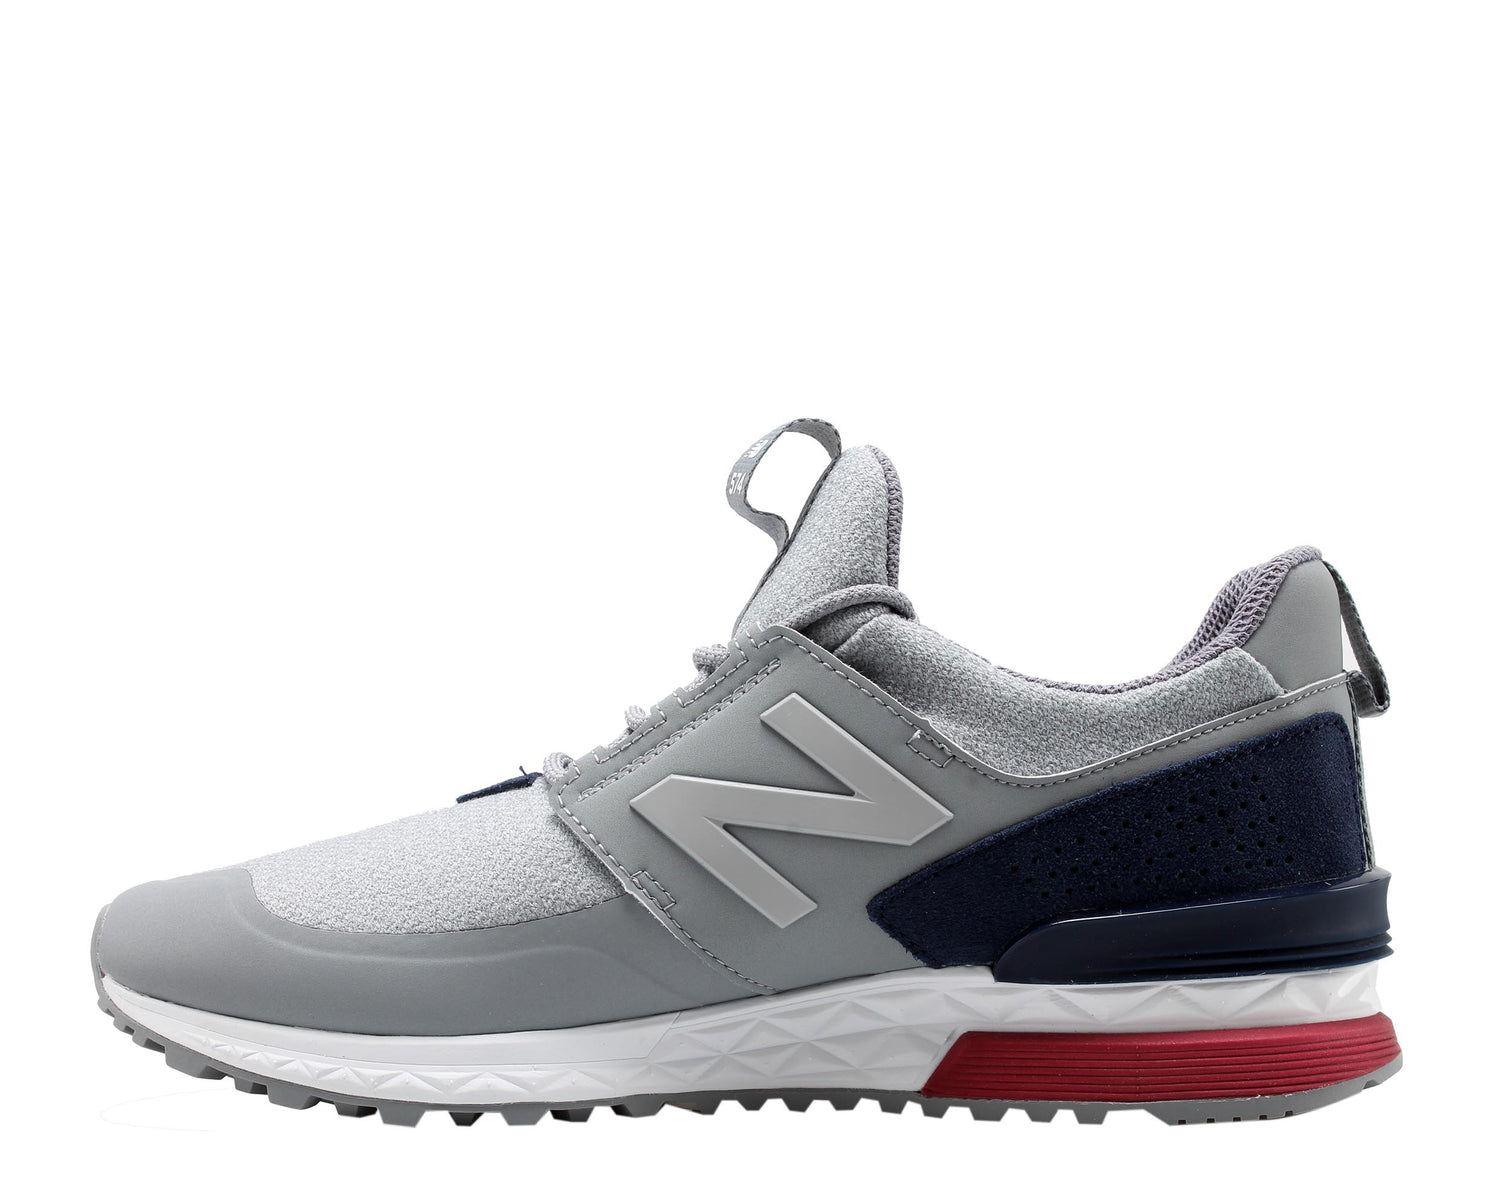 New Balance 574 Men's Running Shoes